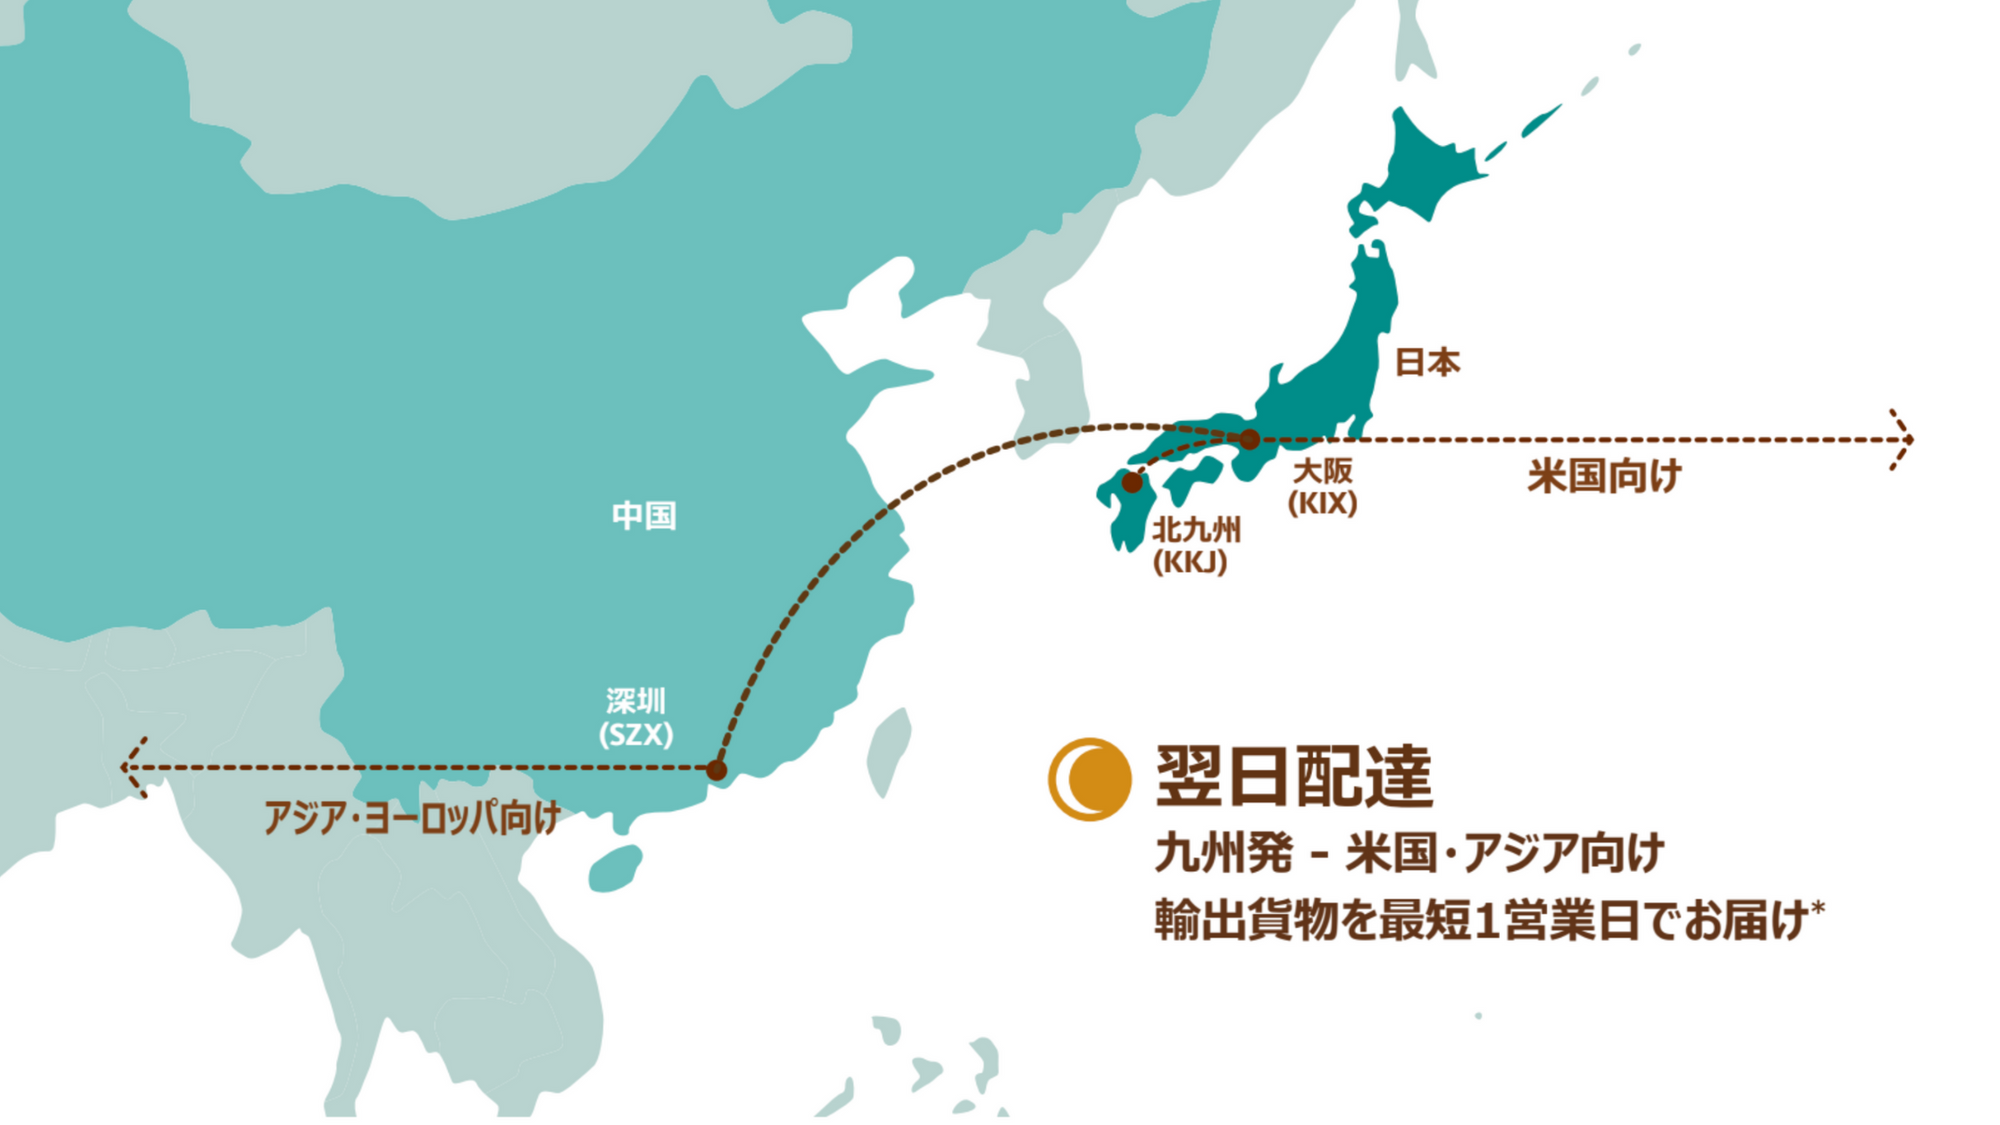 UPSは、九州地方でのサービスを強化し、九州地方の越境EC事業者を支援！